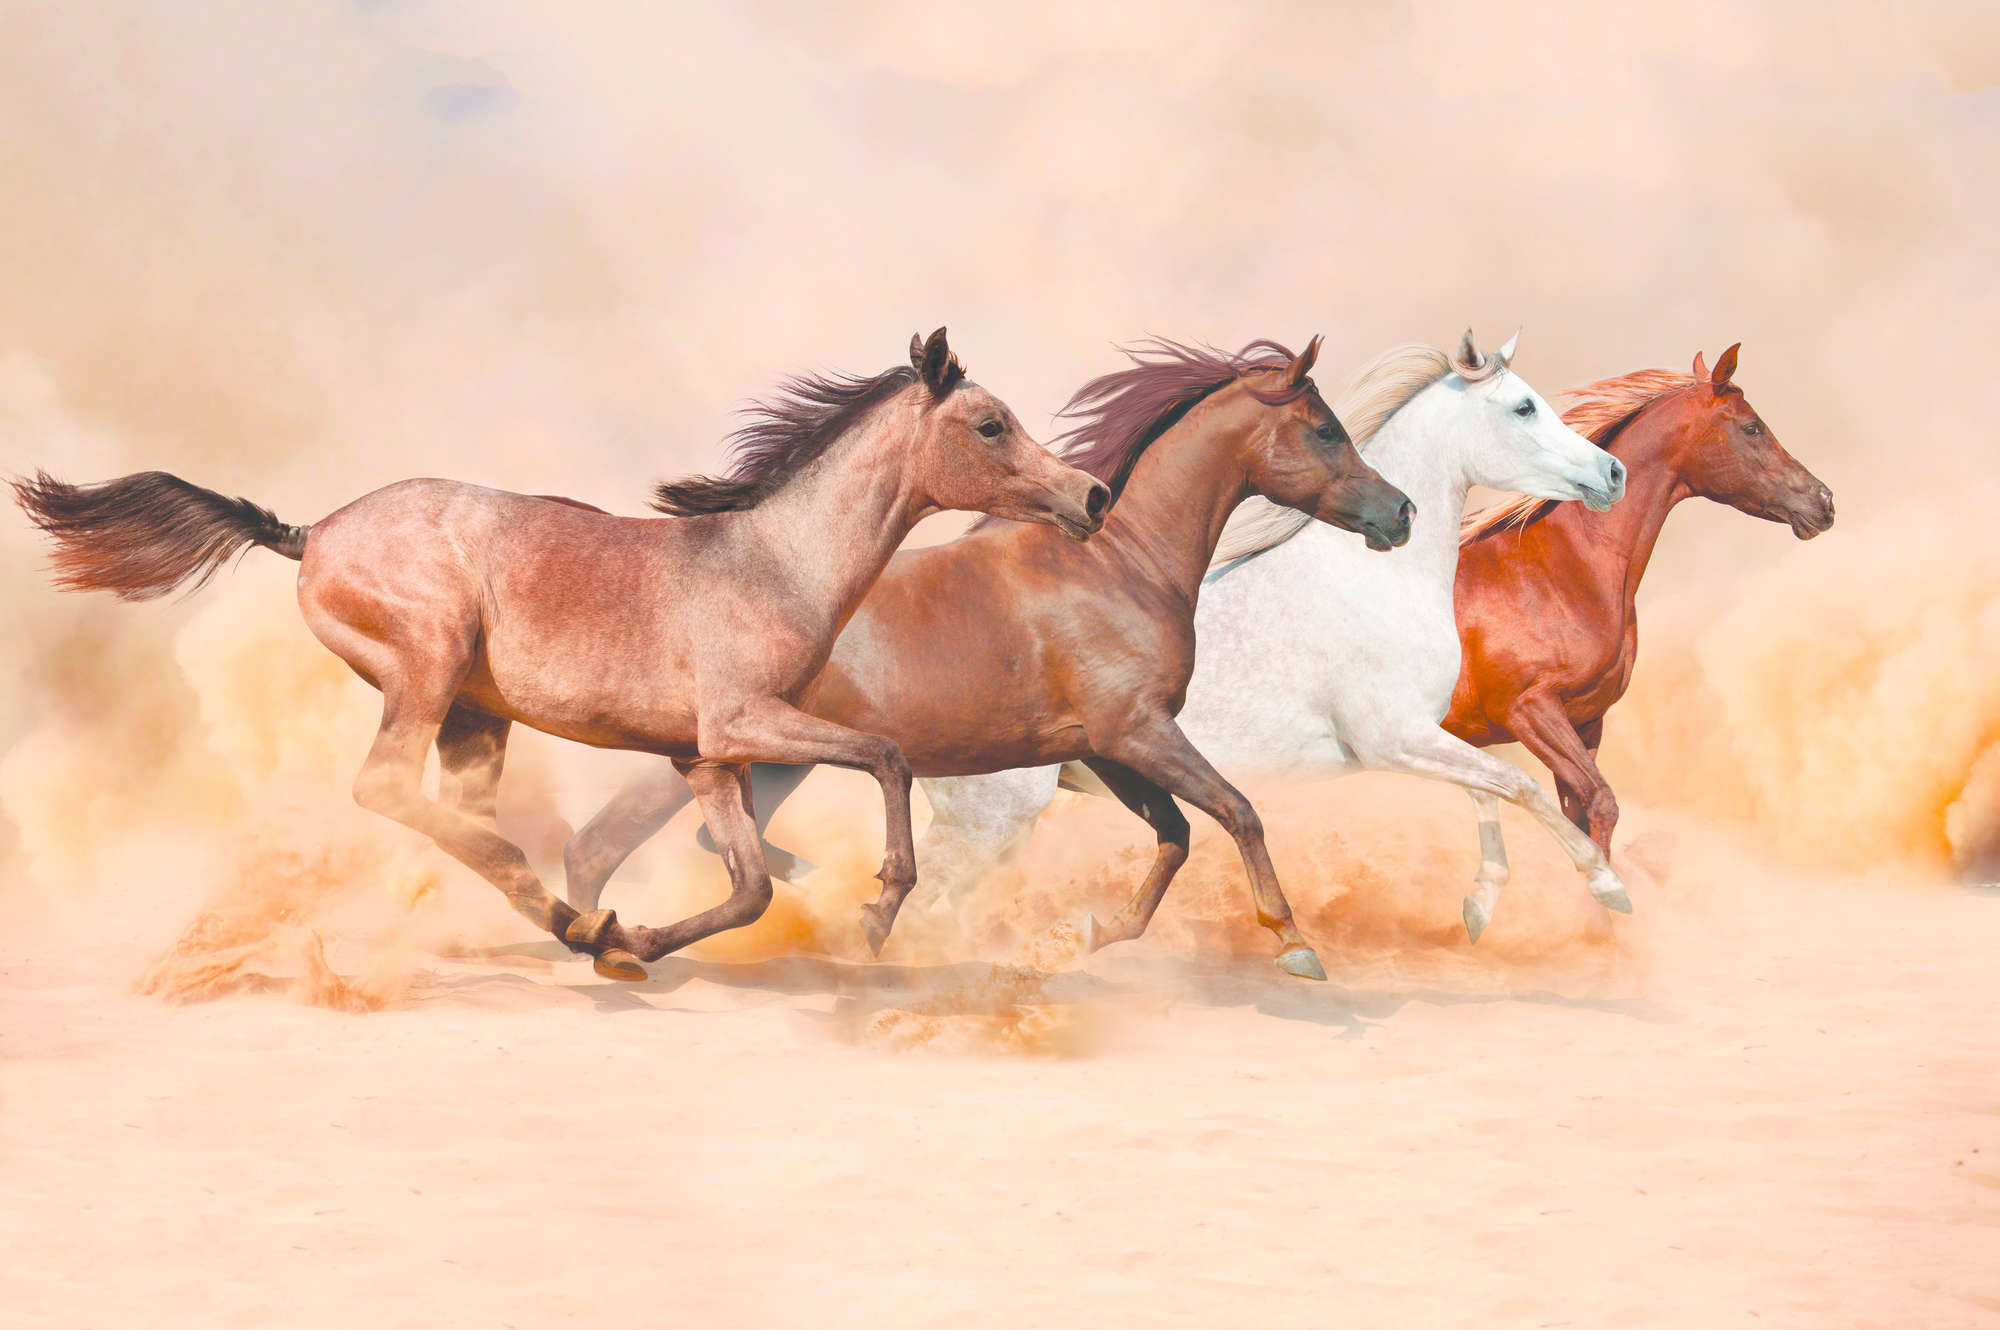             Horse mural with galloping herd on textured fleece
        